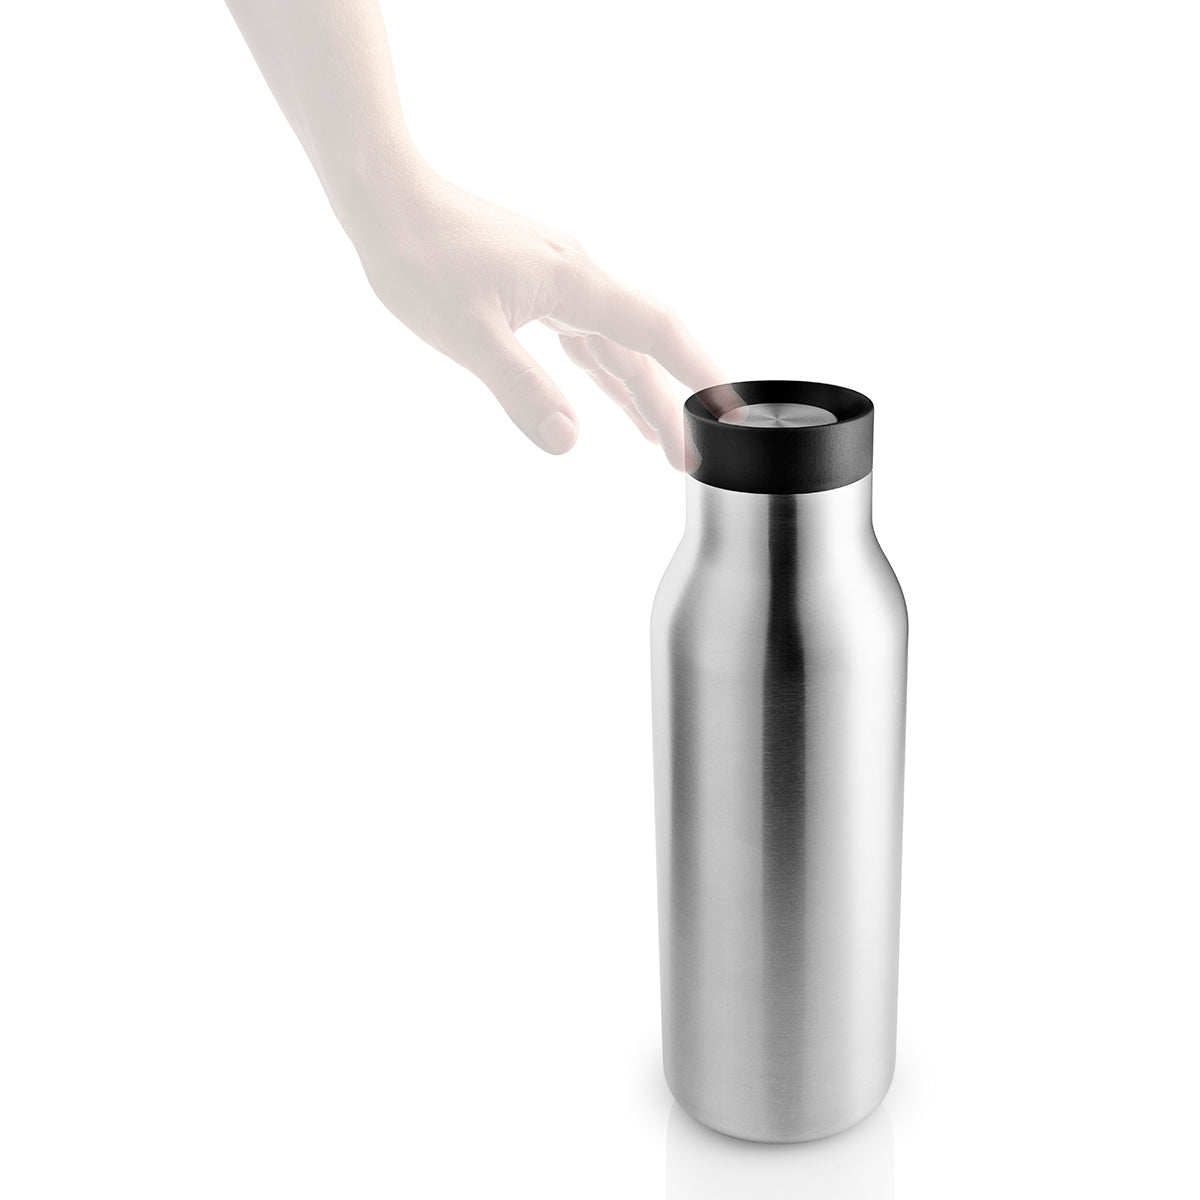 Urban Thermo Flask 0.5L Black